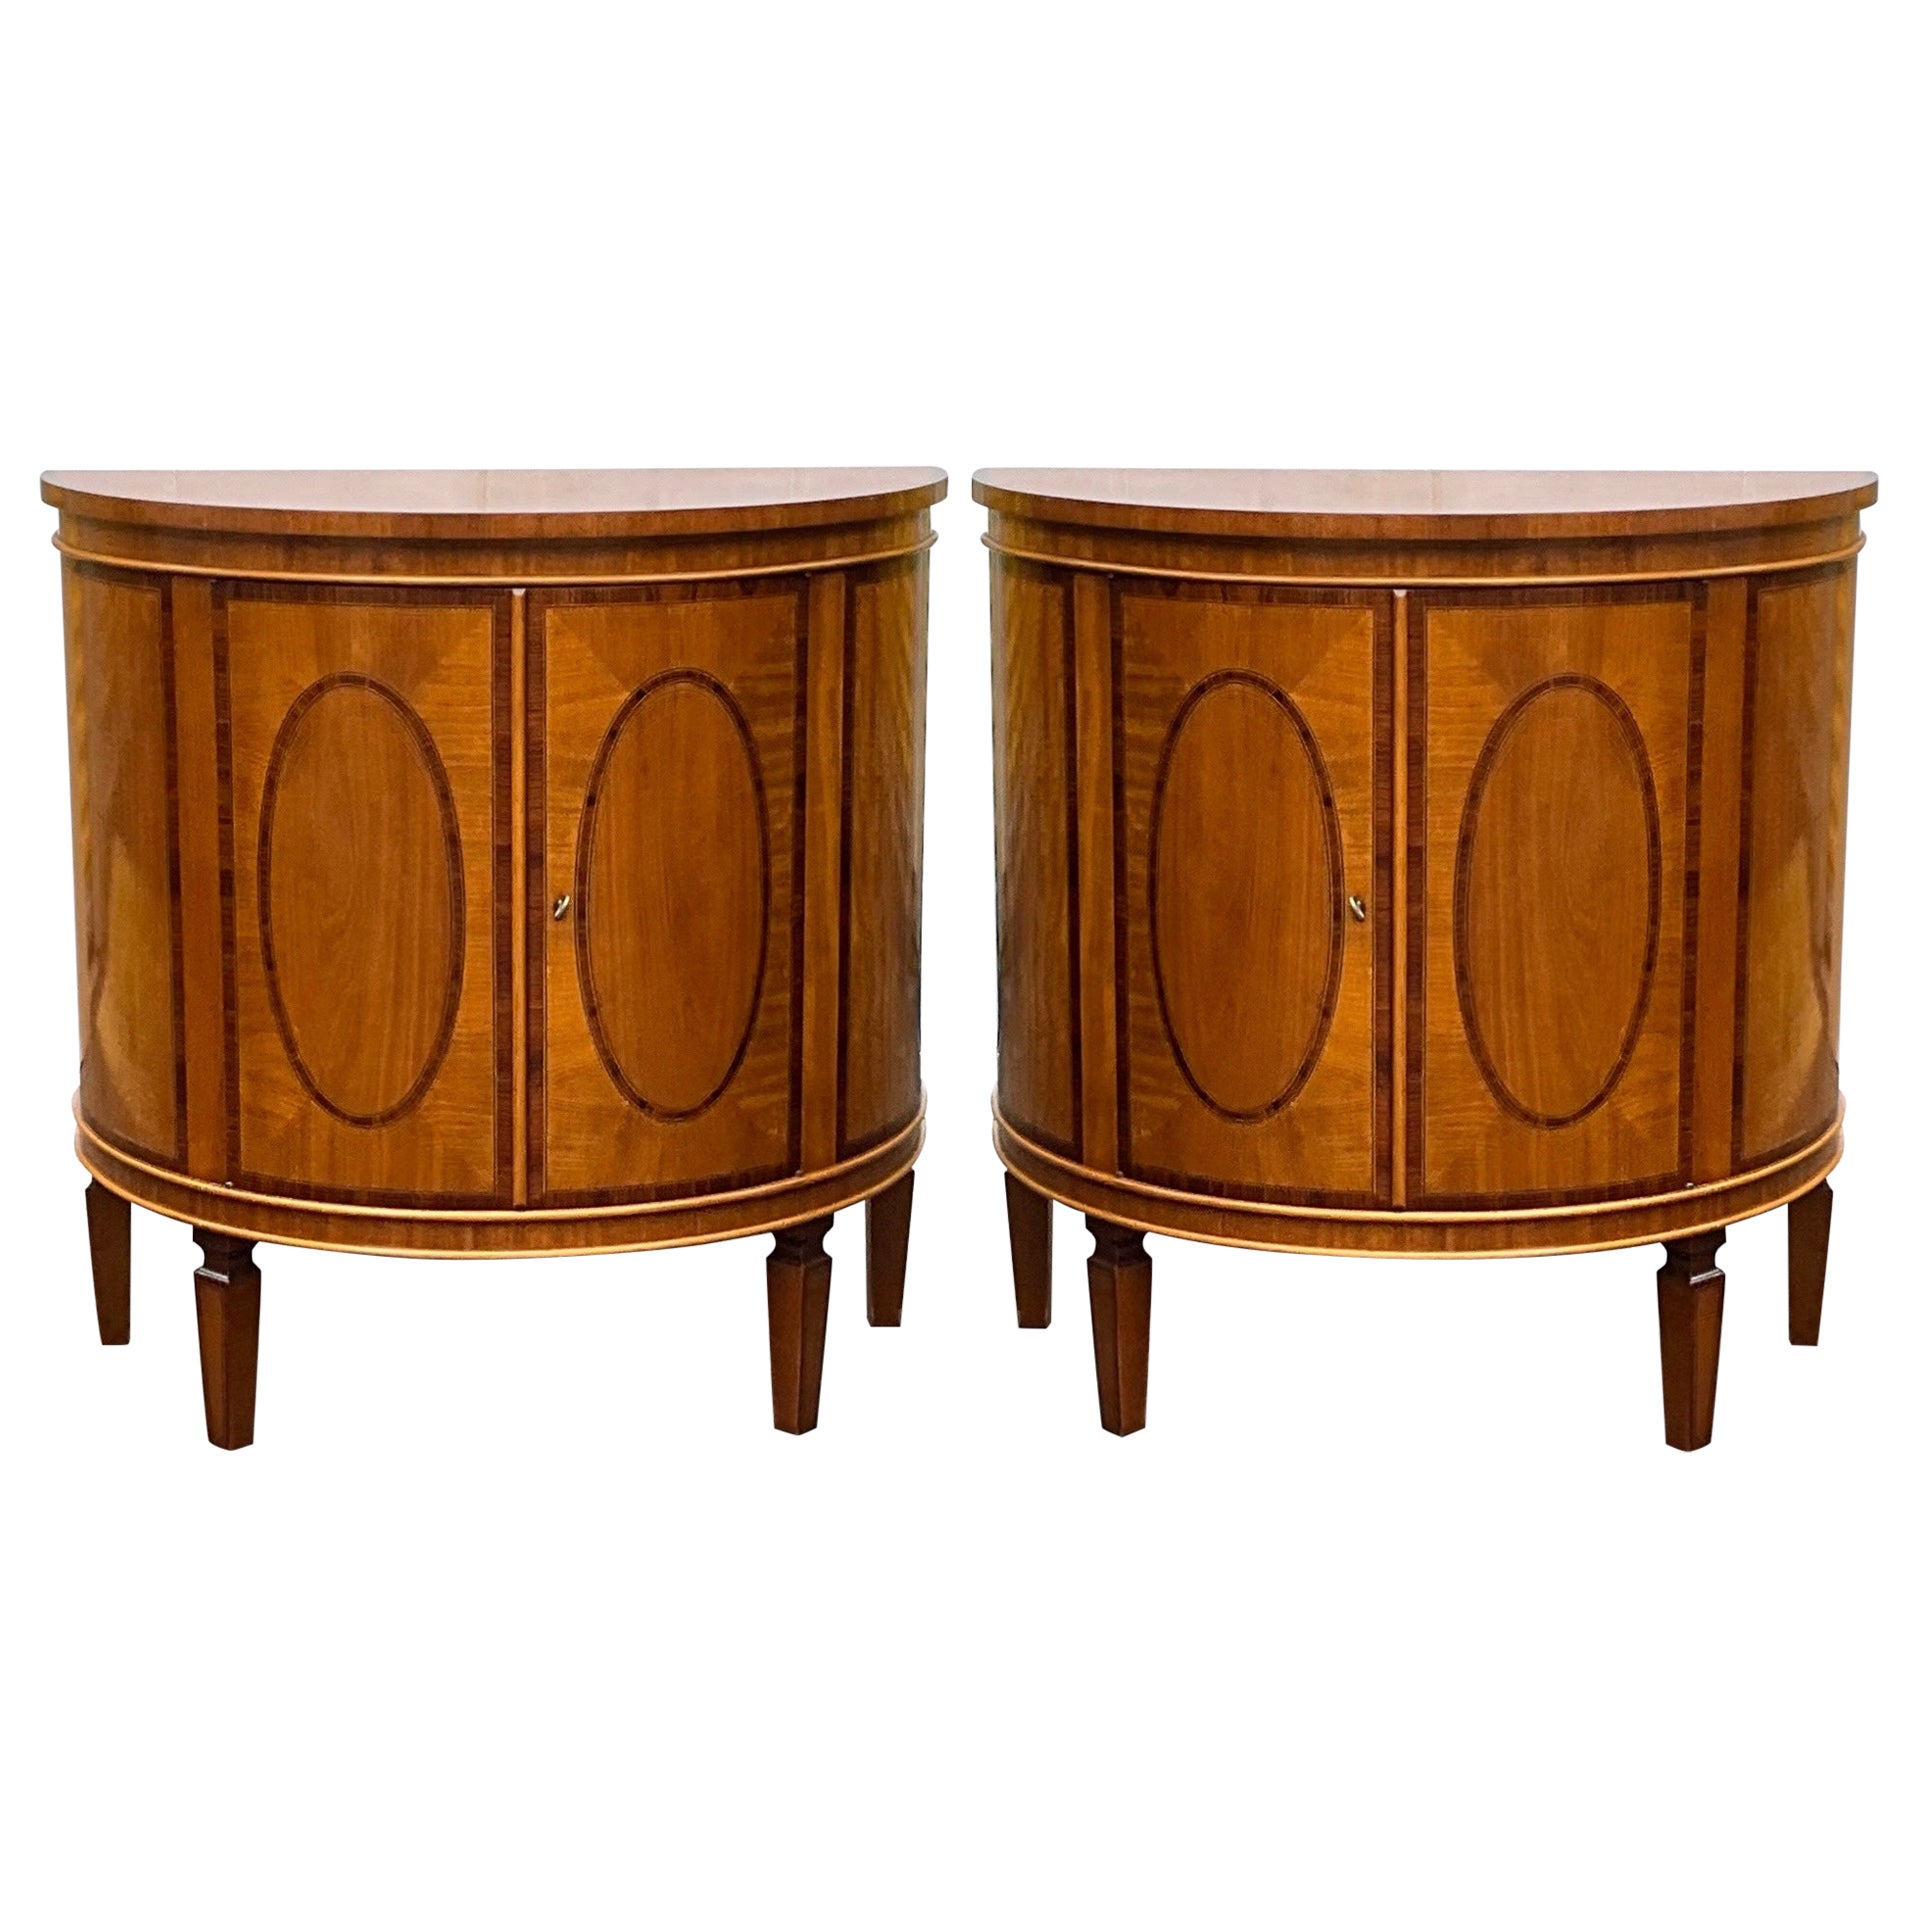 Italian Banded & Inlaid Satinwood Demilune Cabinets Att. Decorative Crafts -Pair